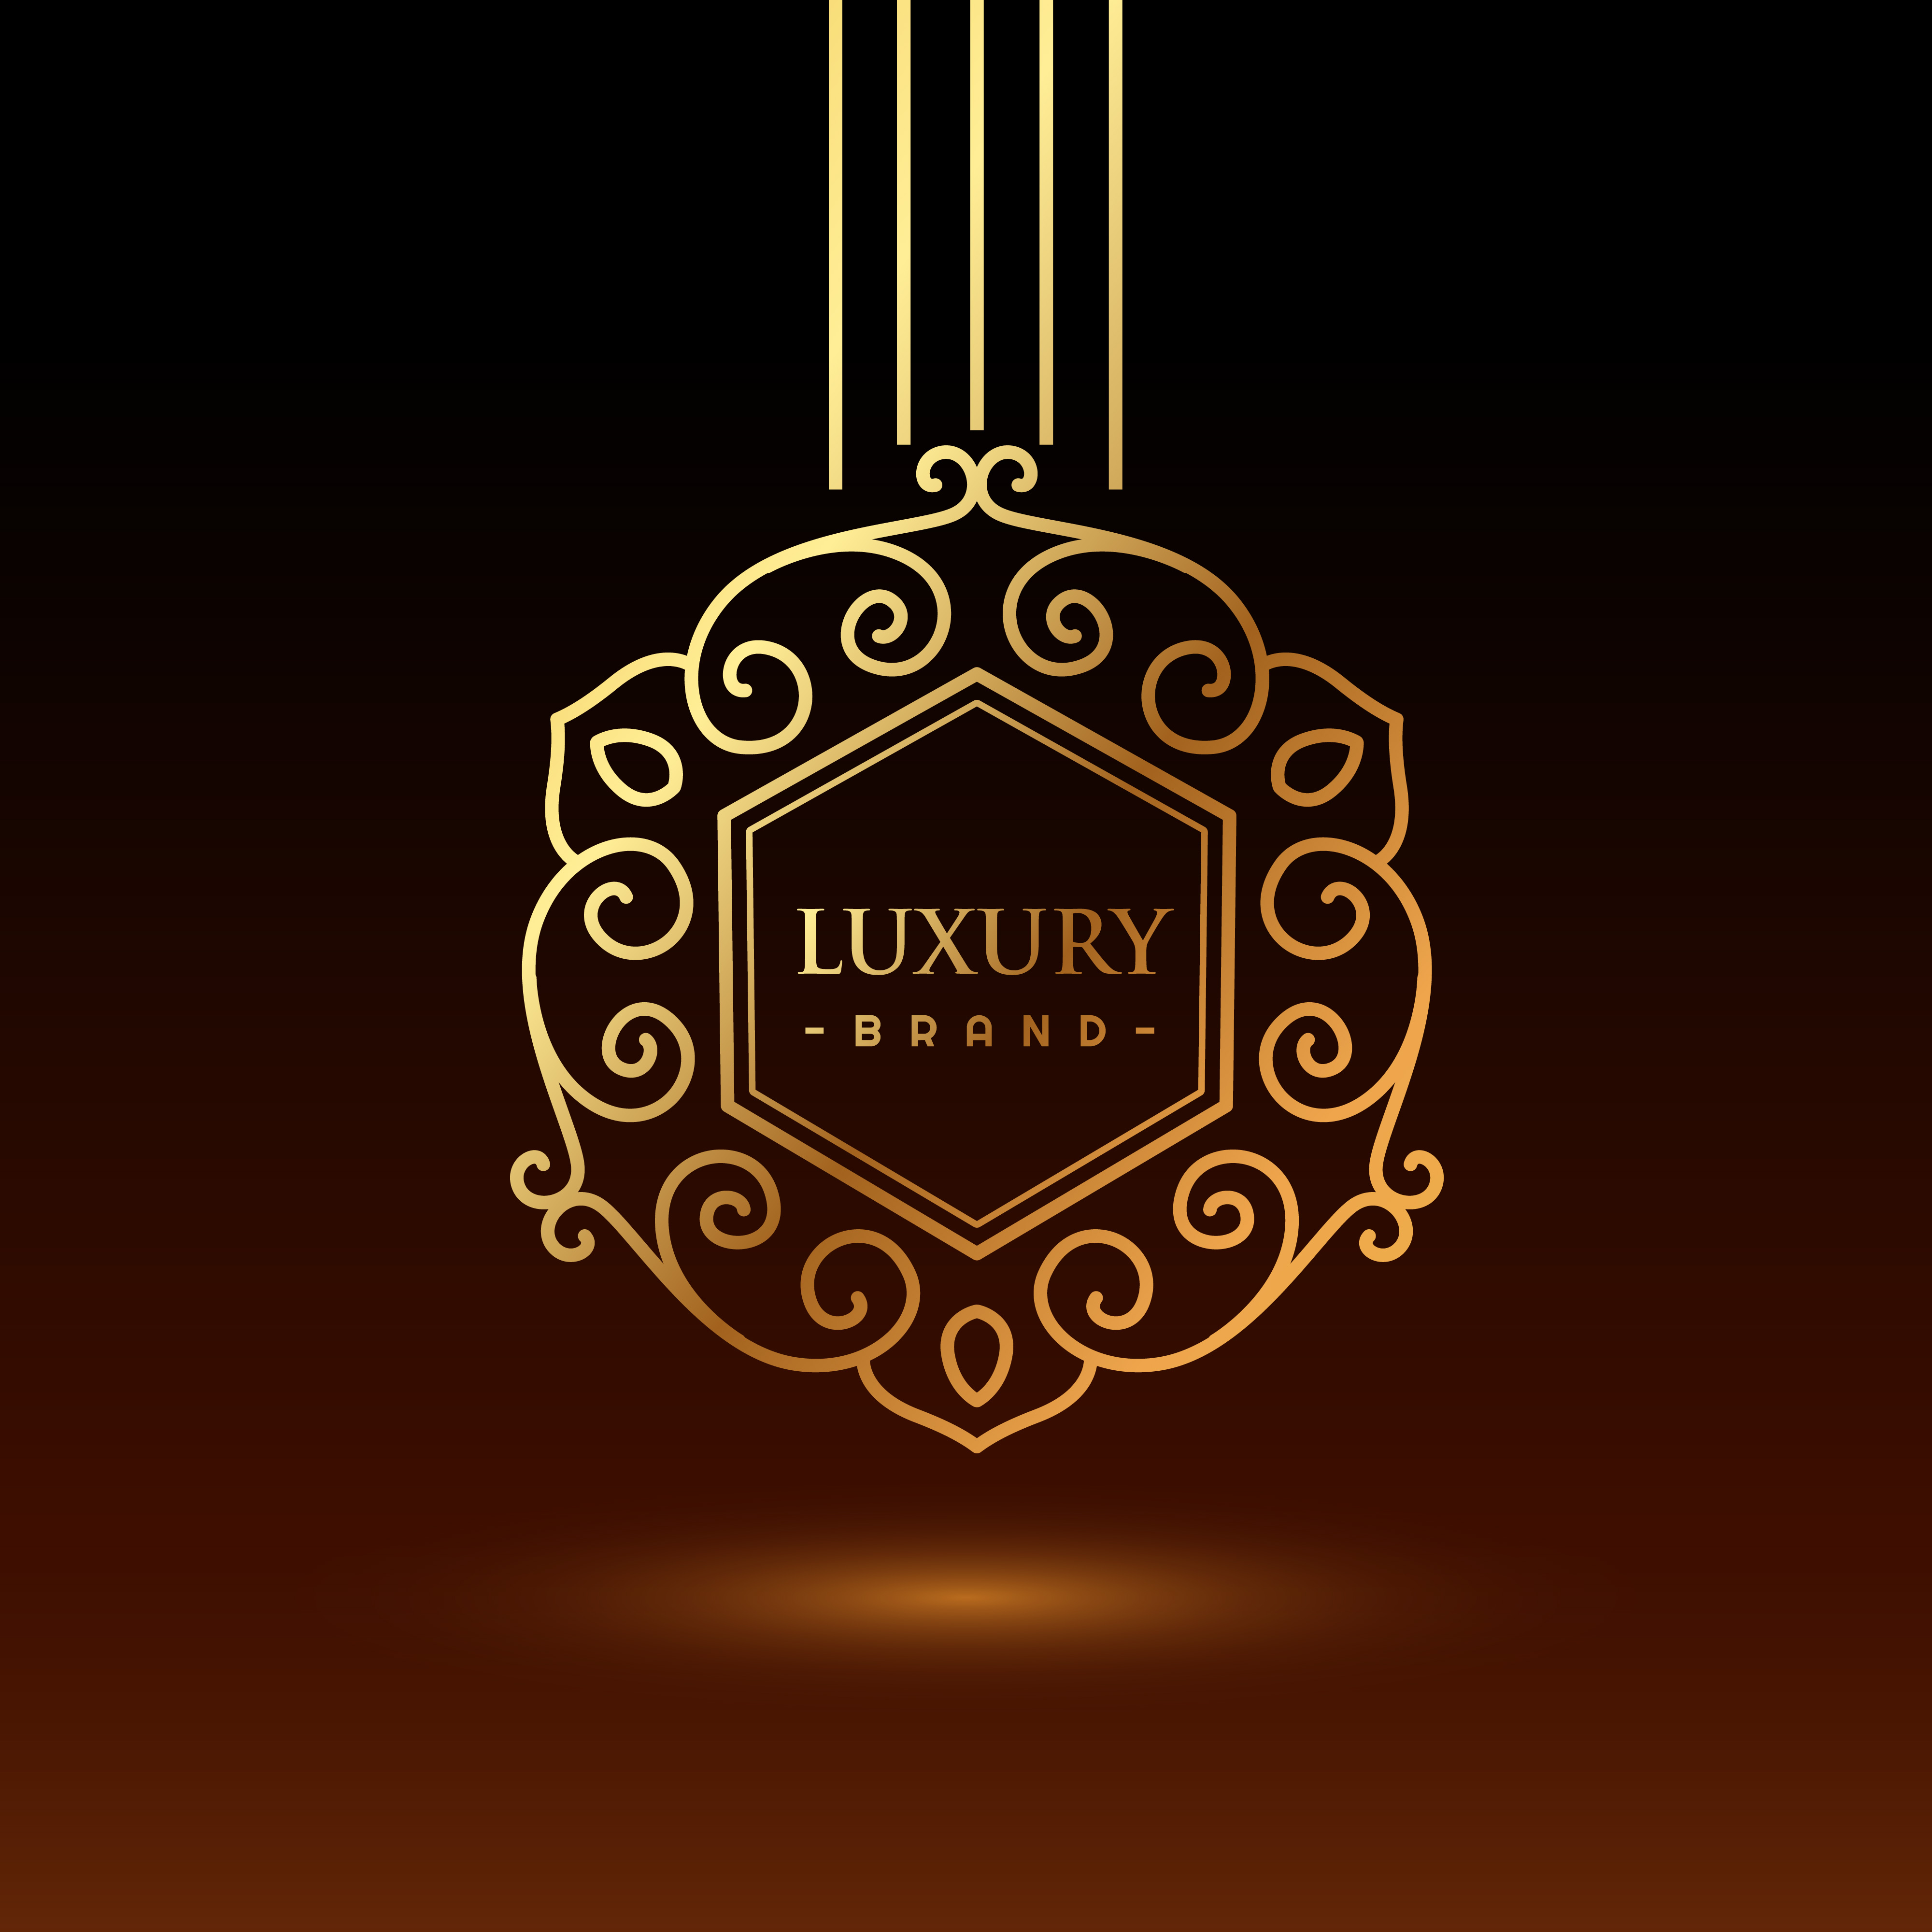 Luxury Brand Logos Pinterest - Best Design Idea